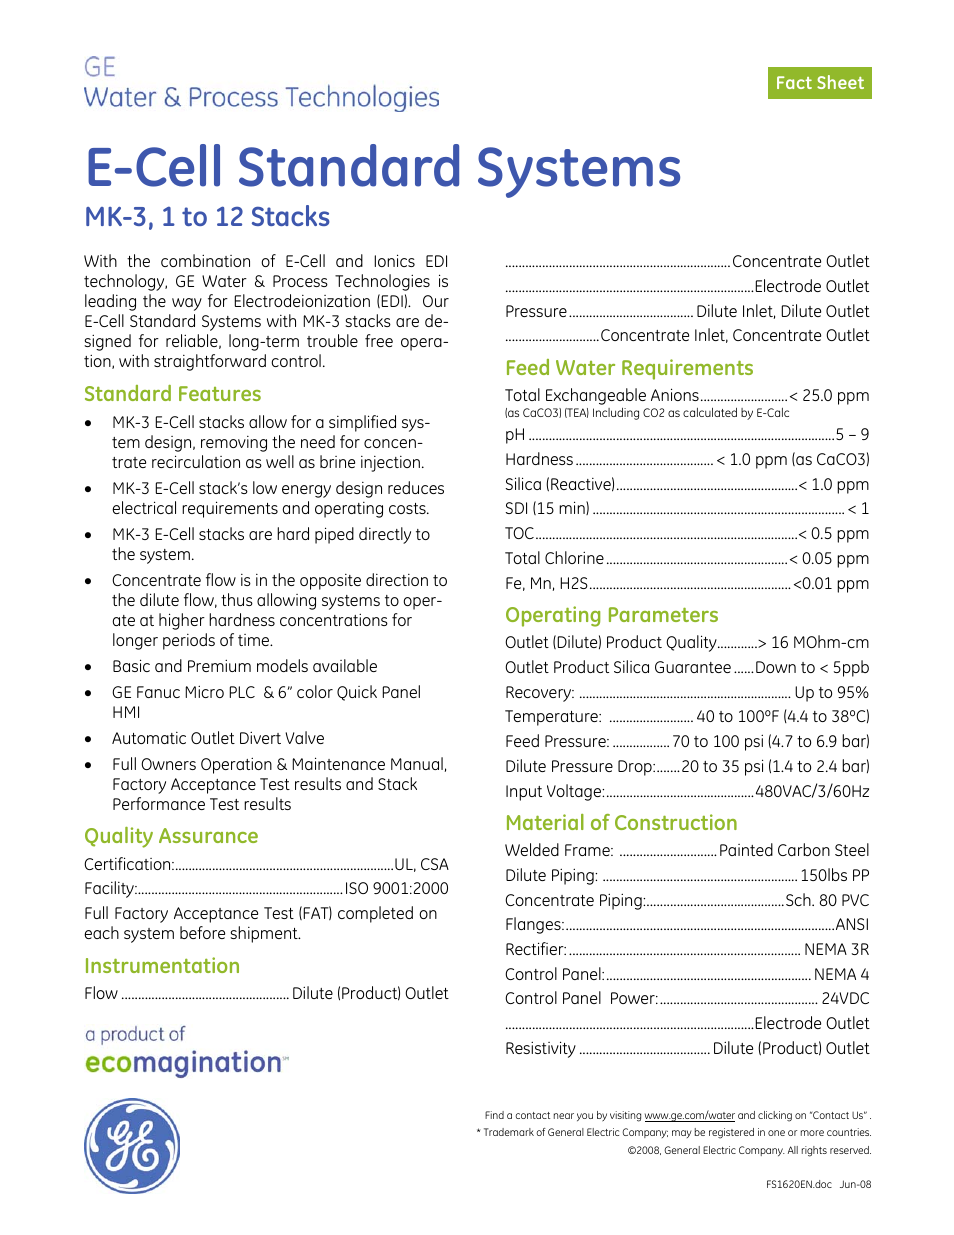 Electrodeionization (EDI) - E-Cell Standard Systems, MK-3, 1 to 12 Stacks